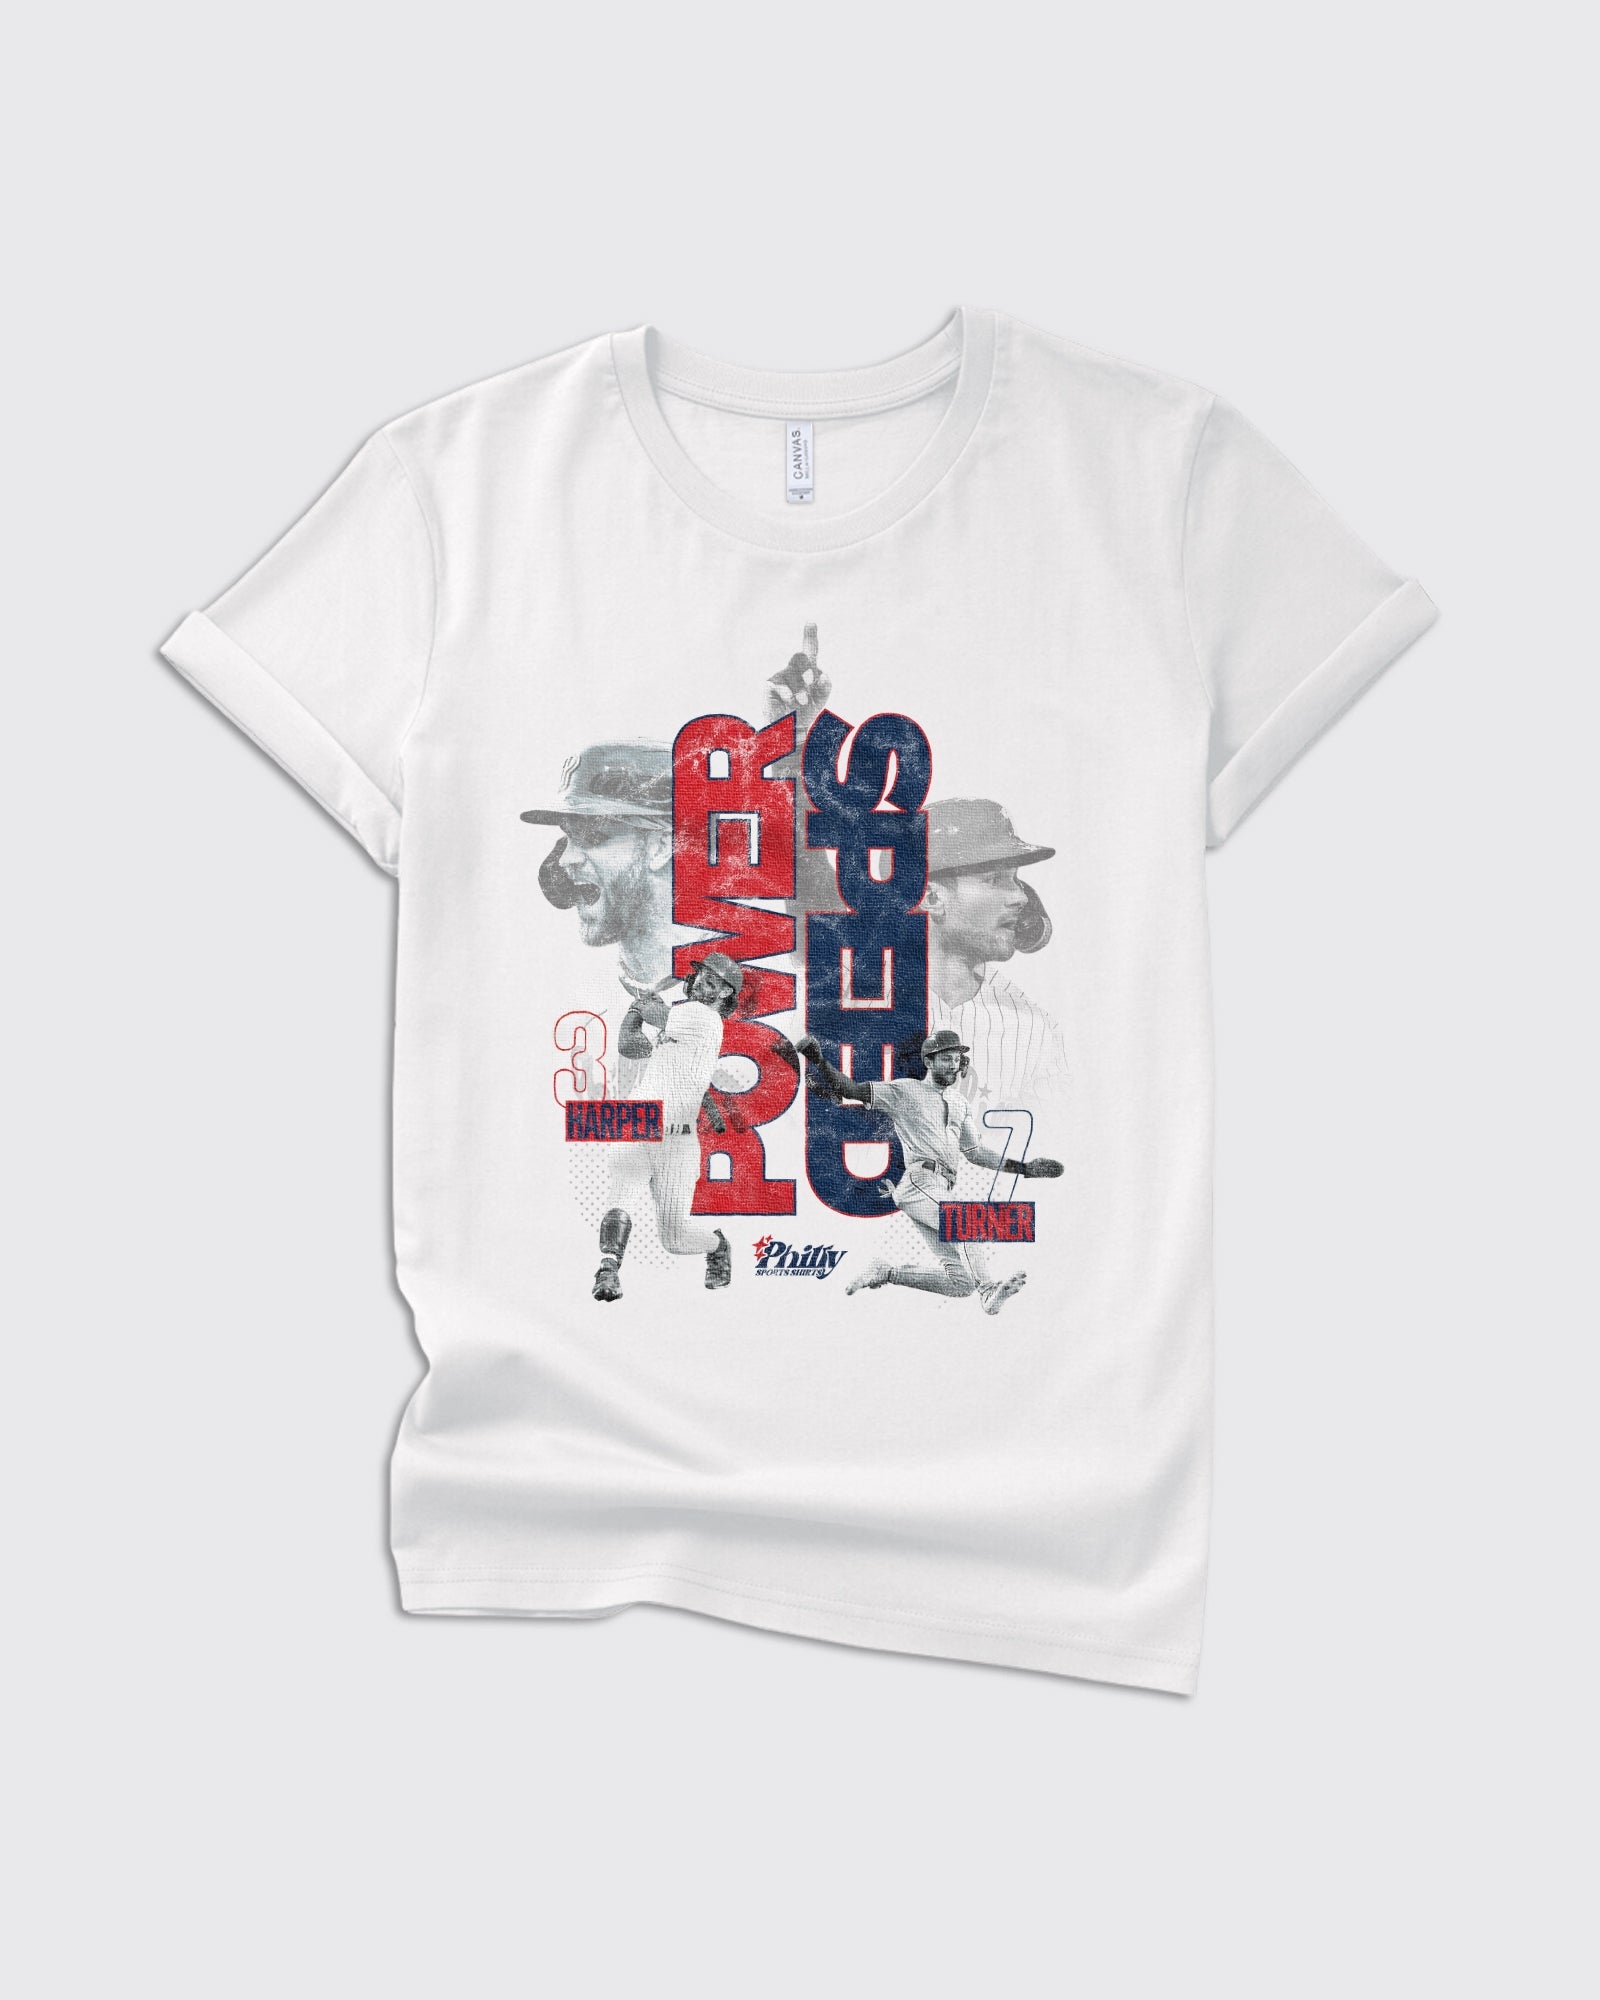 Kids Power and Speed Shirt - Phillies Baseball T-Shirt - Philly Sports Shirts